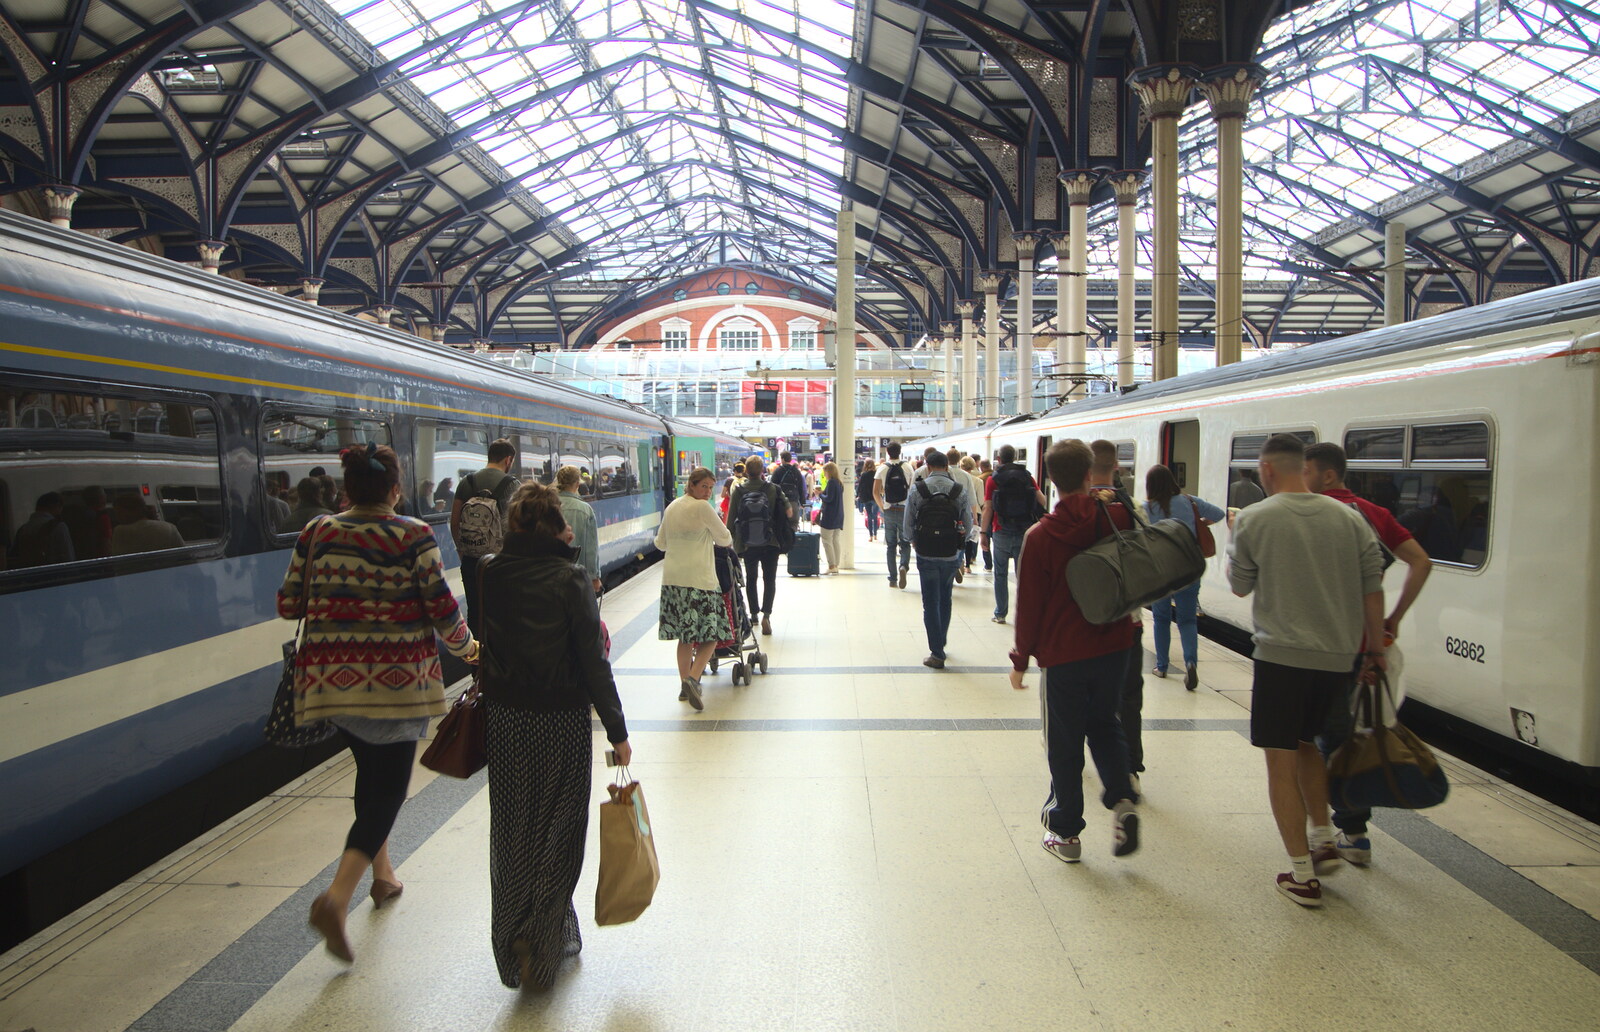 Passengers pile off the train on platform 9 from Spitalfields and Brick Lane Street Art, Whitechapel, London - 10th August 2013